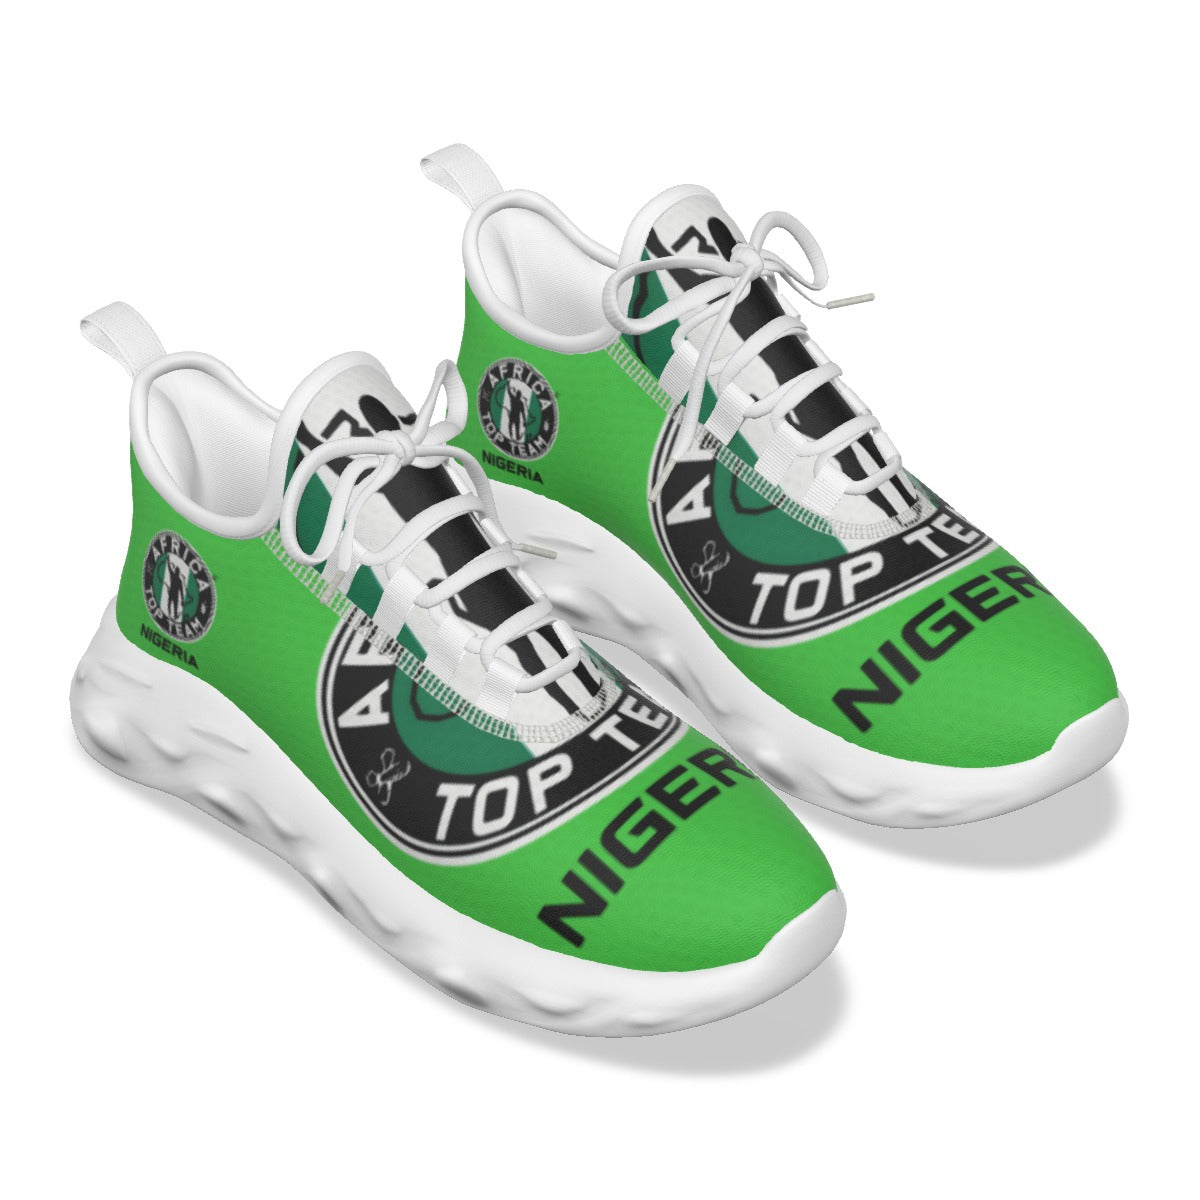 Africa Top Team Nigeria Green Sneakers